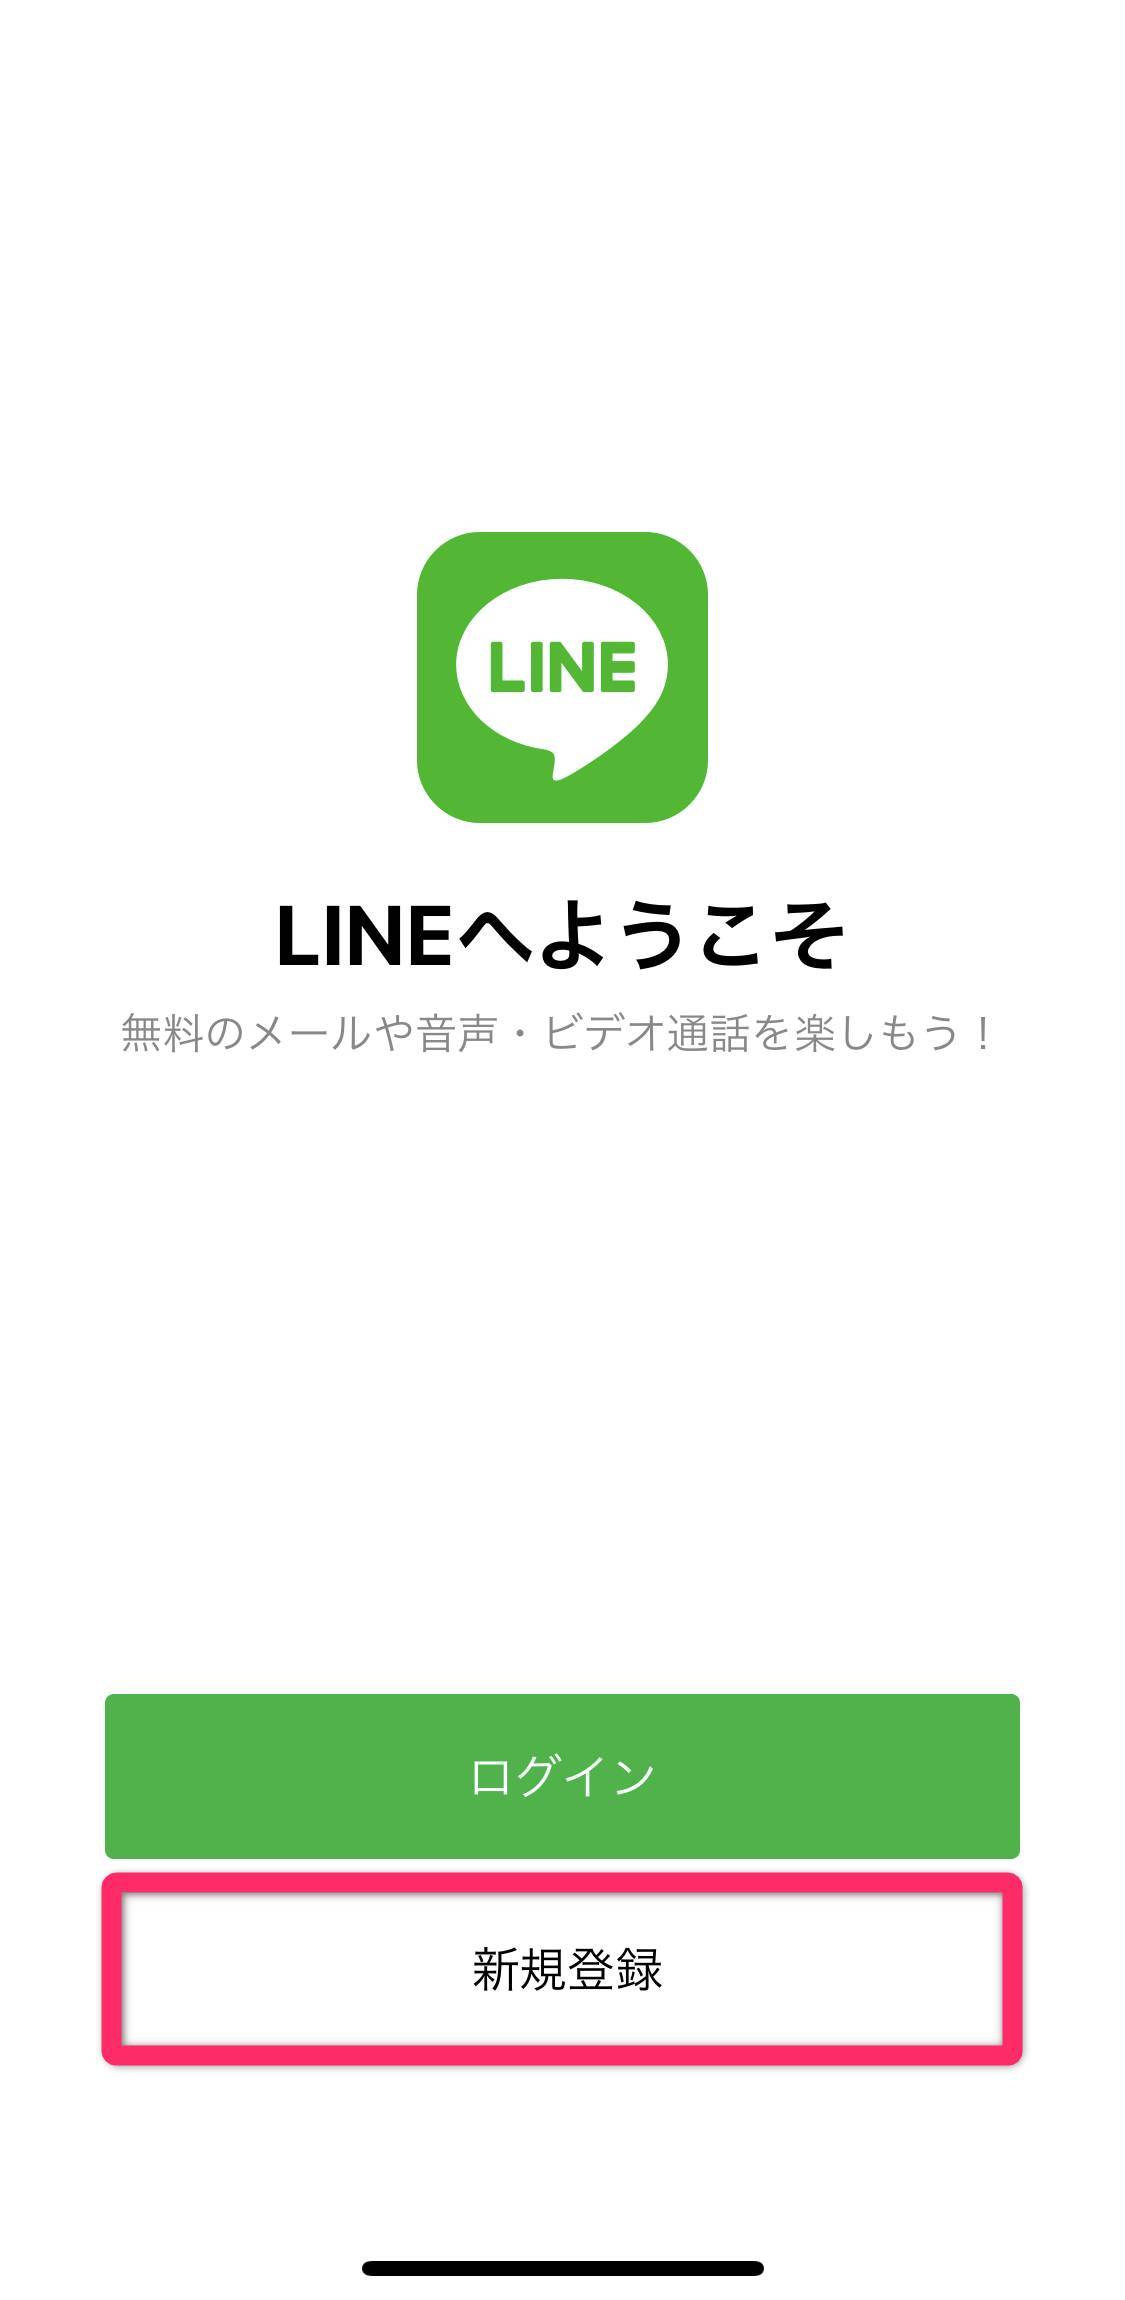 Lineのアカウント作成 新規登録方法をわかりやすく解説 年最新版 Appliv Topics